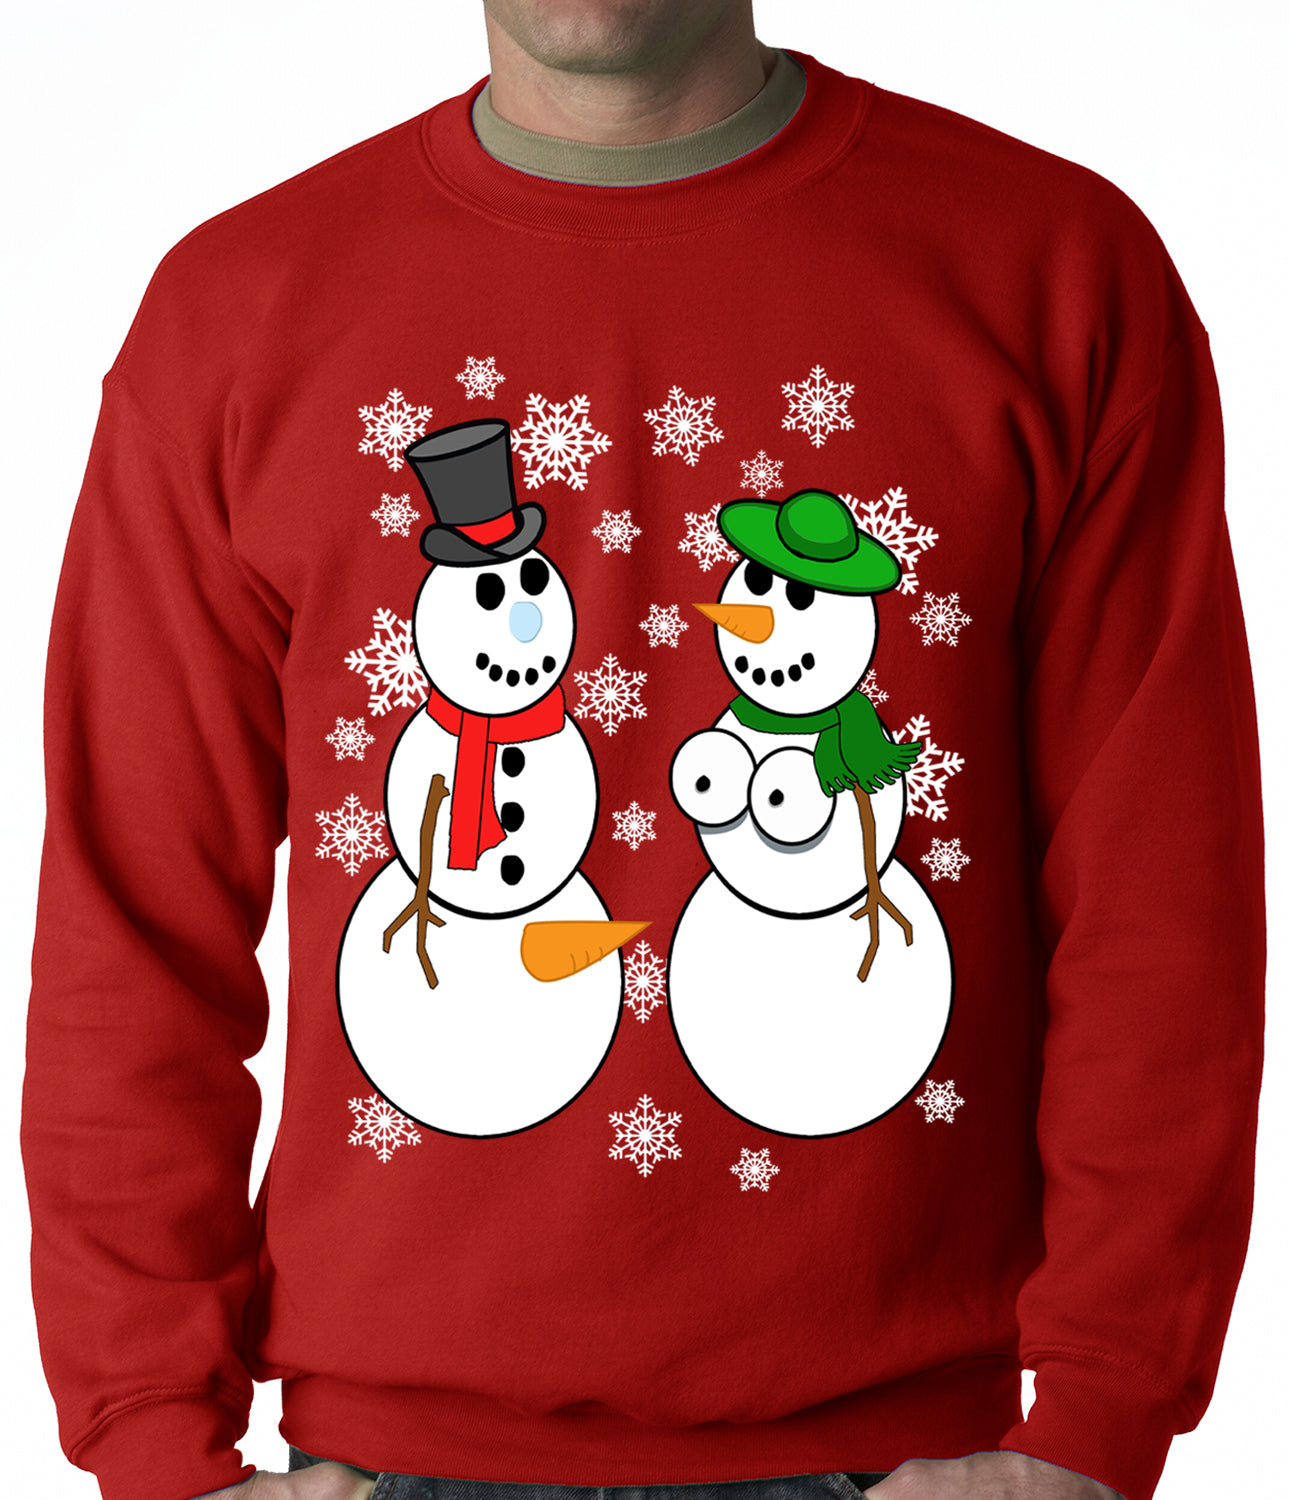 Mr. and Mrs. Perverted Snowman Ugly Christmas Sweater Crewneck Sweatshirt